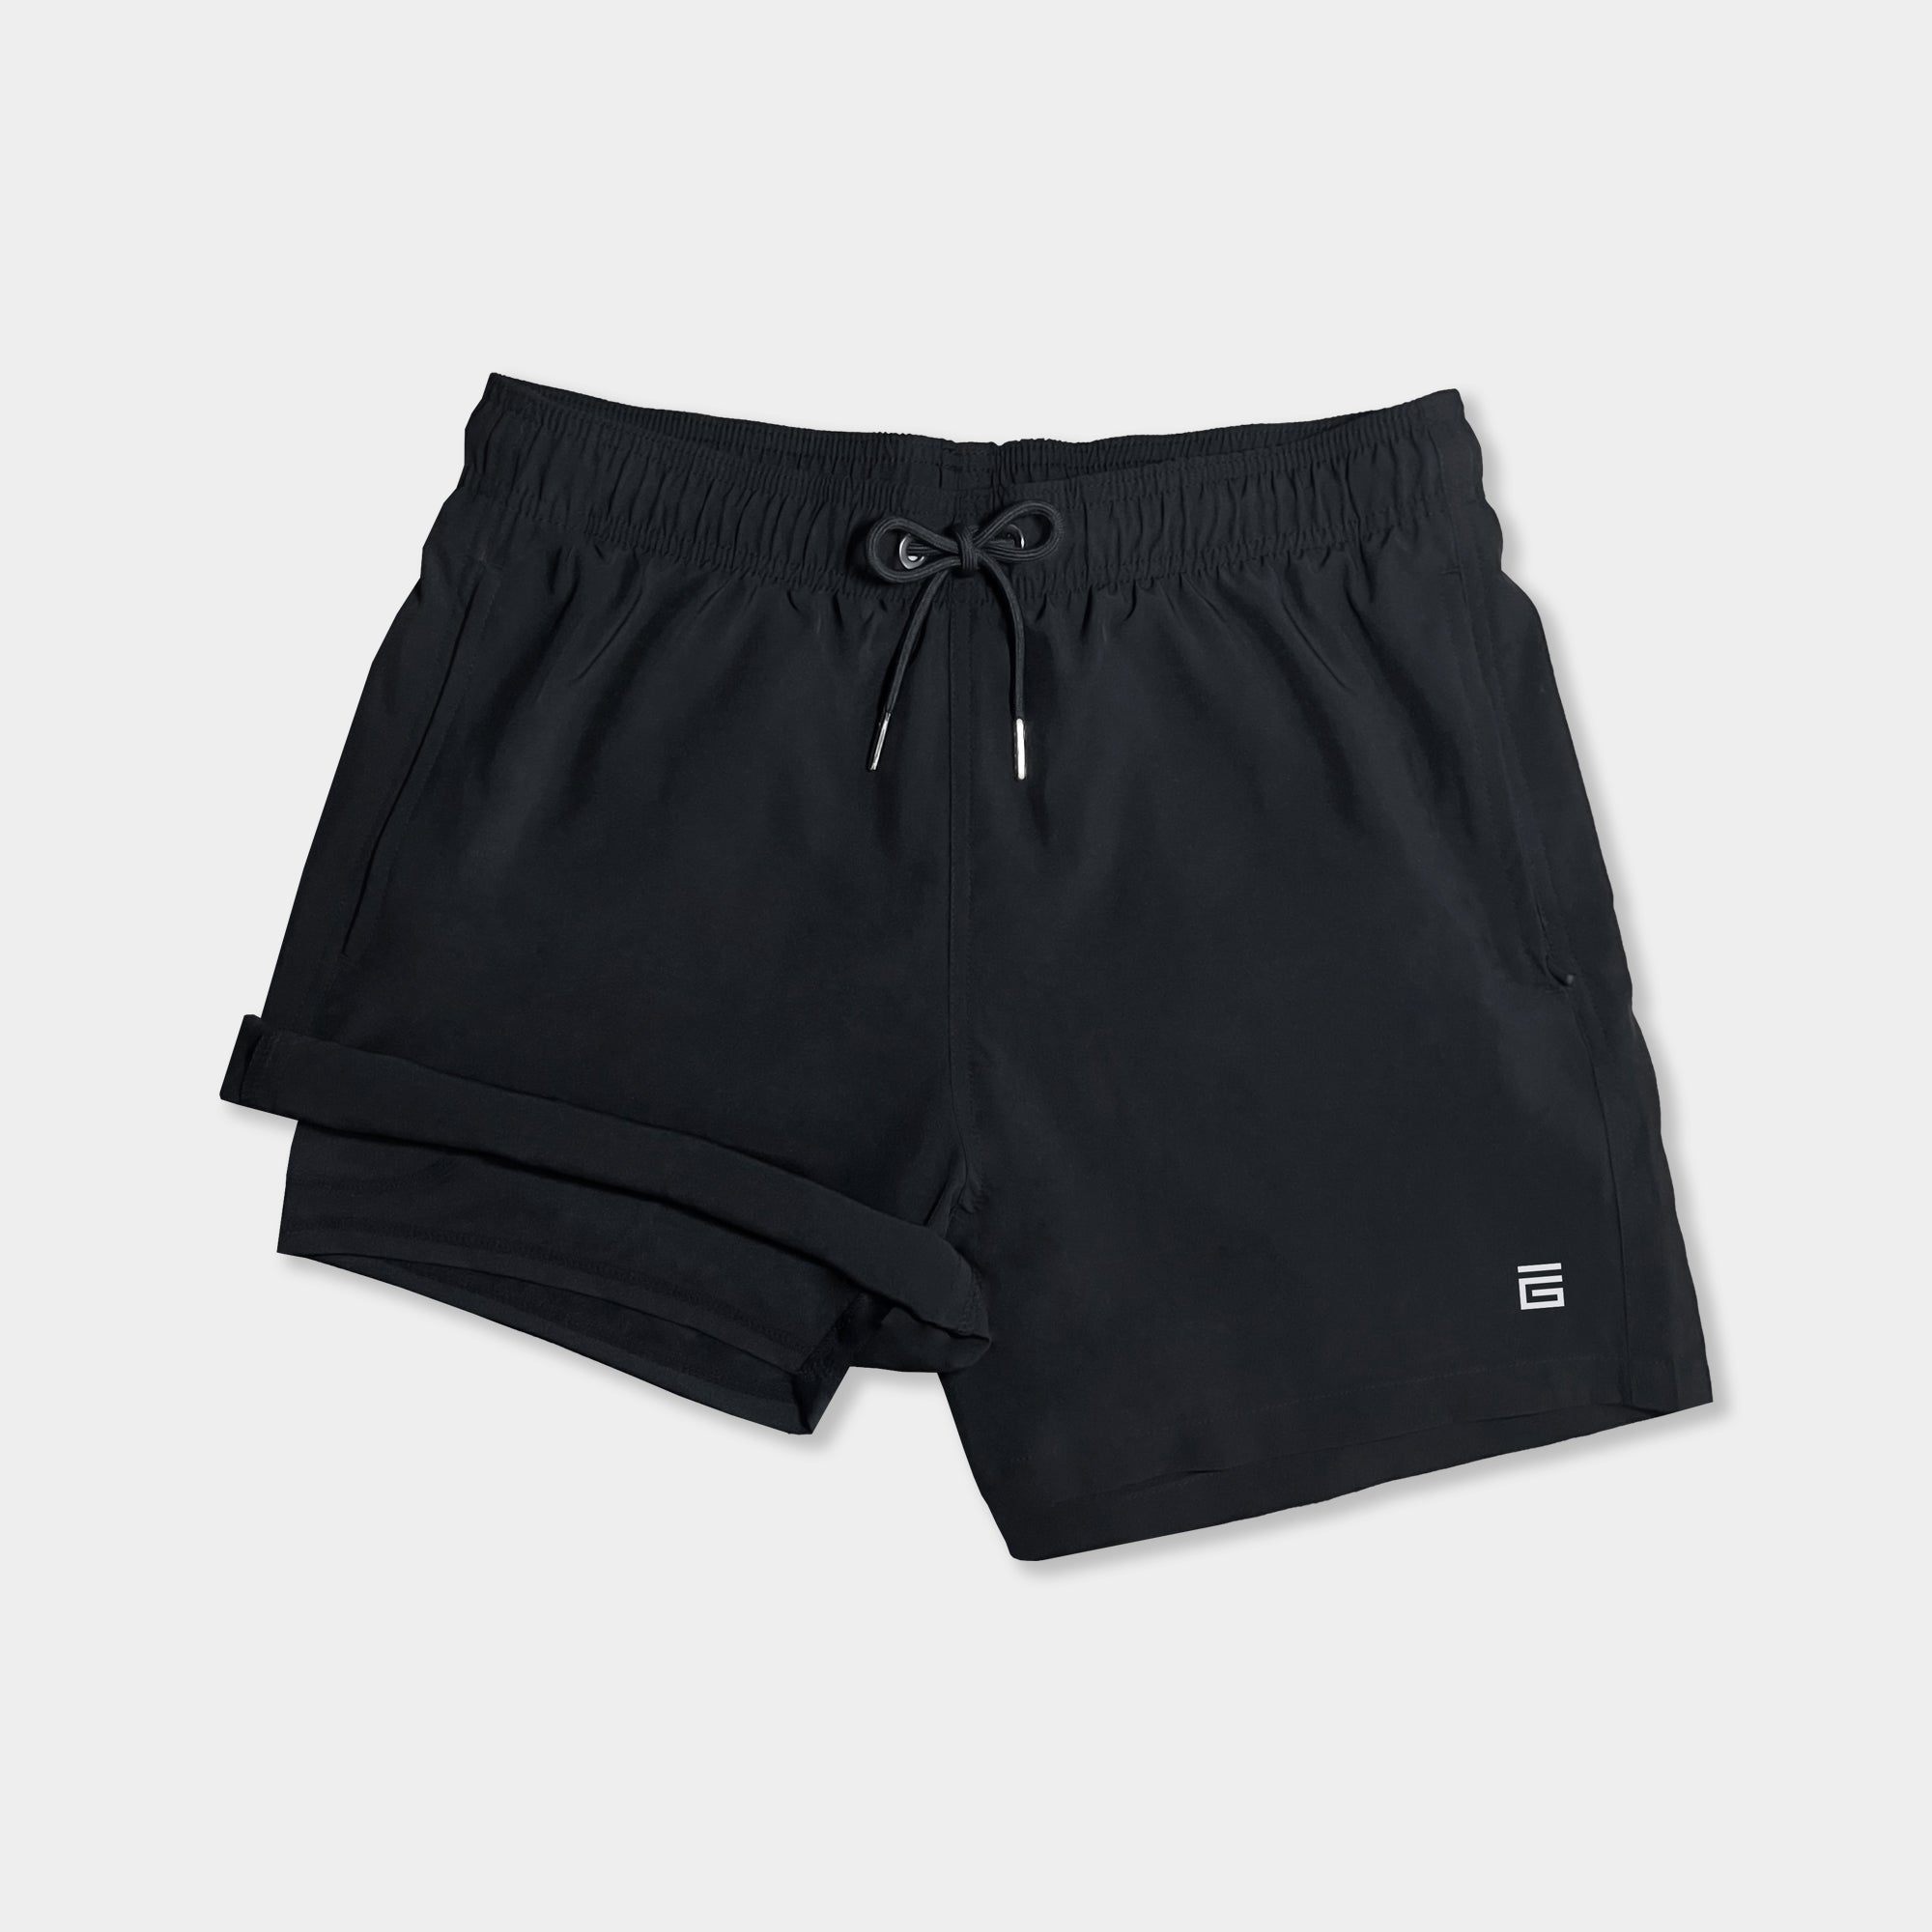 boxer-lined-swim-shorts-black-01_336a11bb-261a-4244-afe8-620ce94905e3.jpg